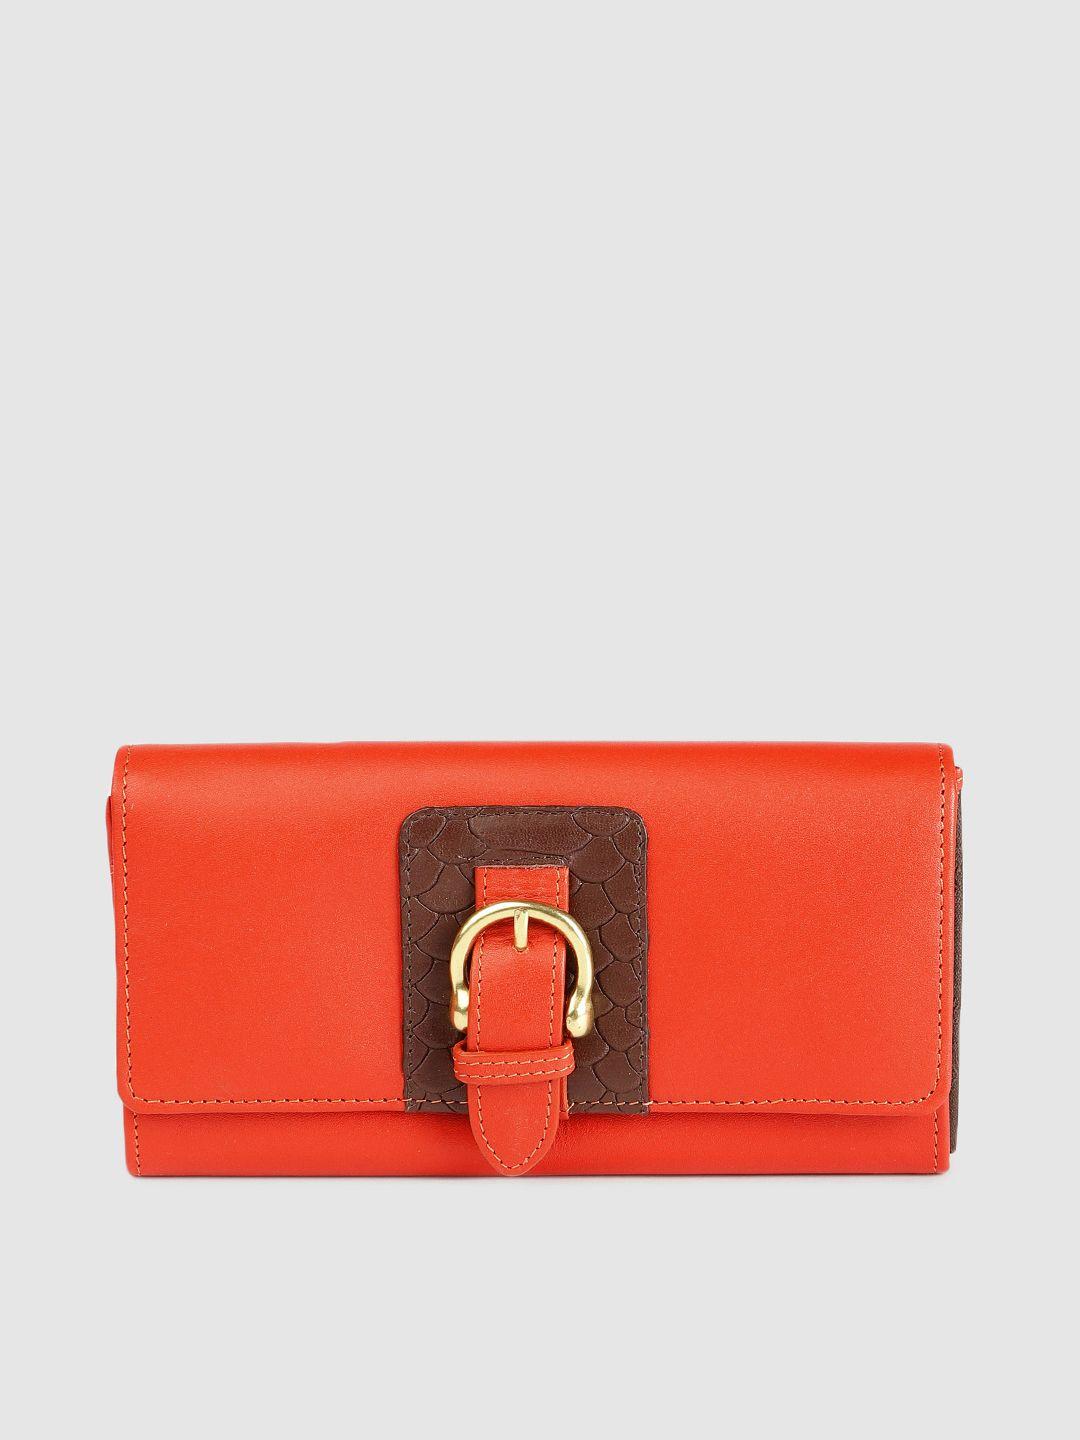 hidesign women orange solid leather envelope